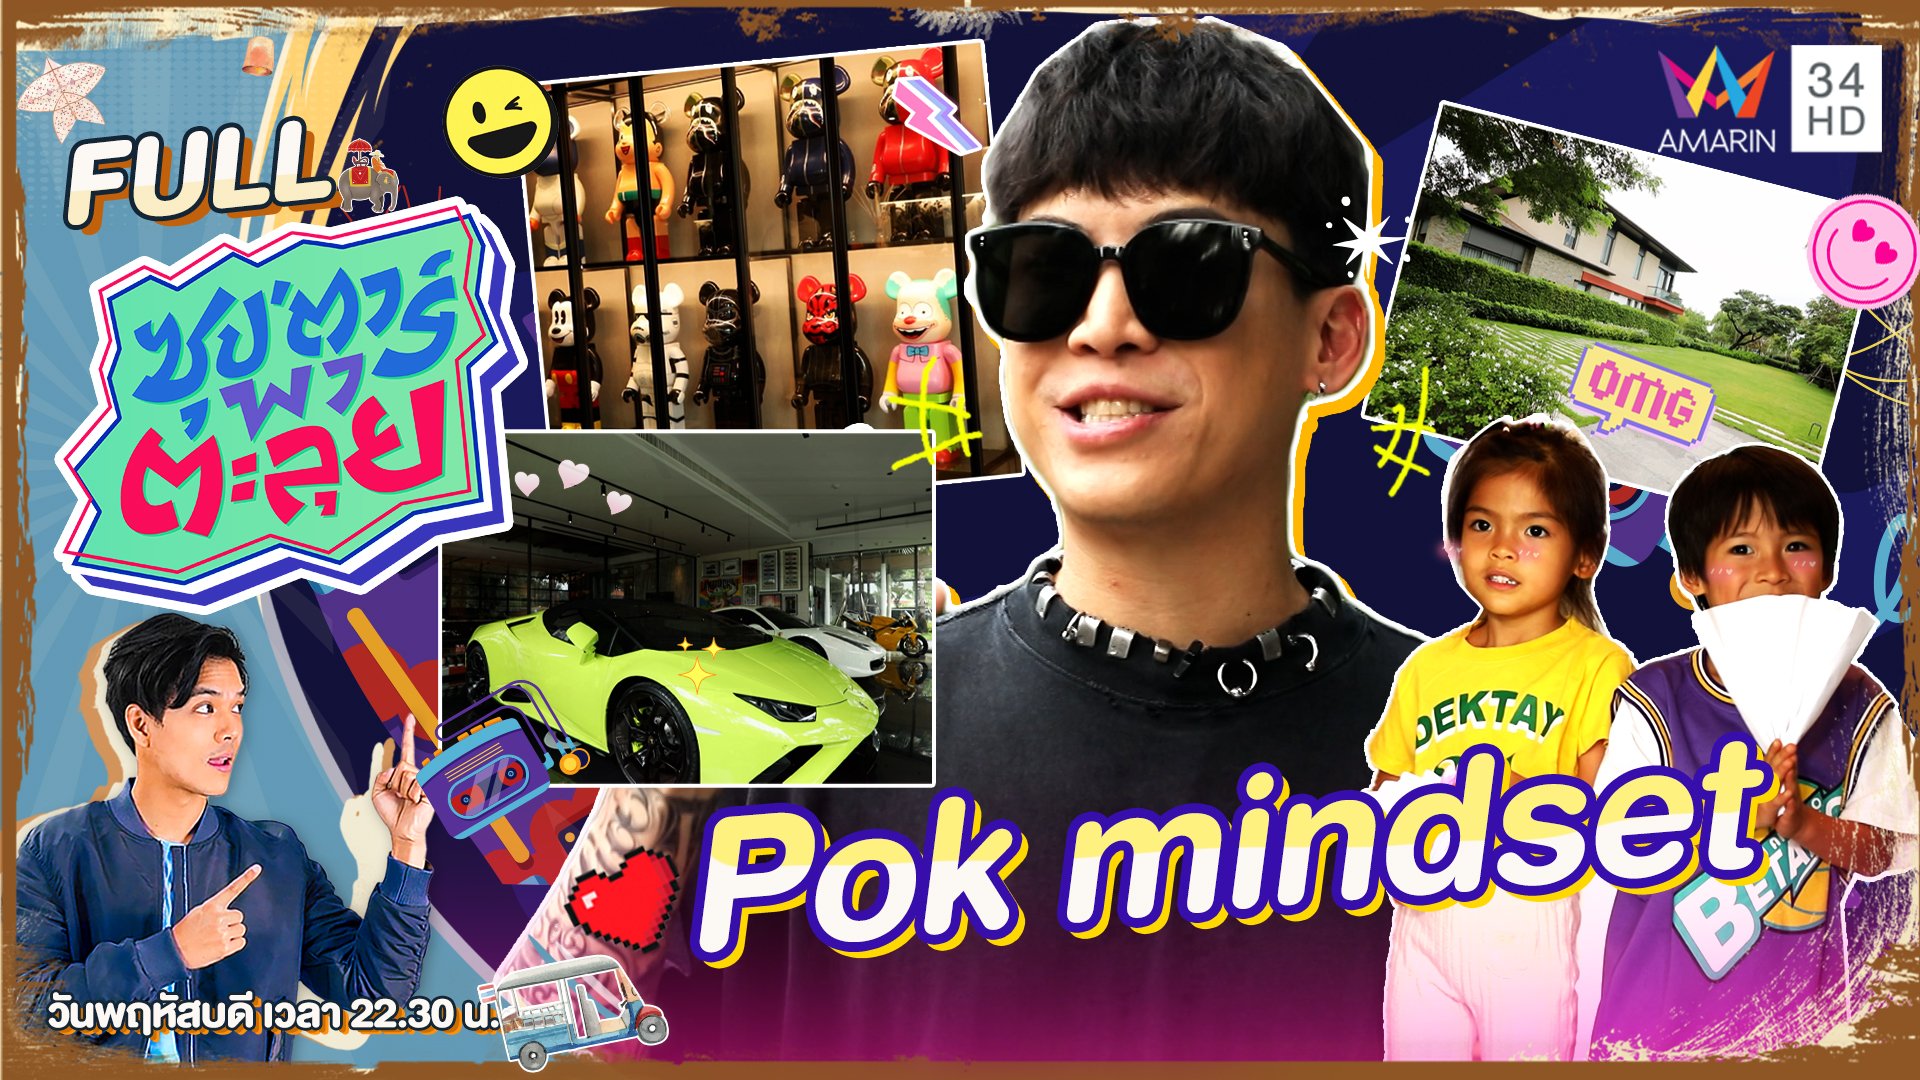 "Pok mindset" พาทัวร์อาณาจักรพันล้านตระกูลจิราธิวัฒน์ | ซุปตาร์พาตะลุย | 26 ต.ค. 66 | AMARIN TVHD34